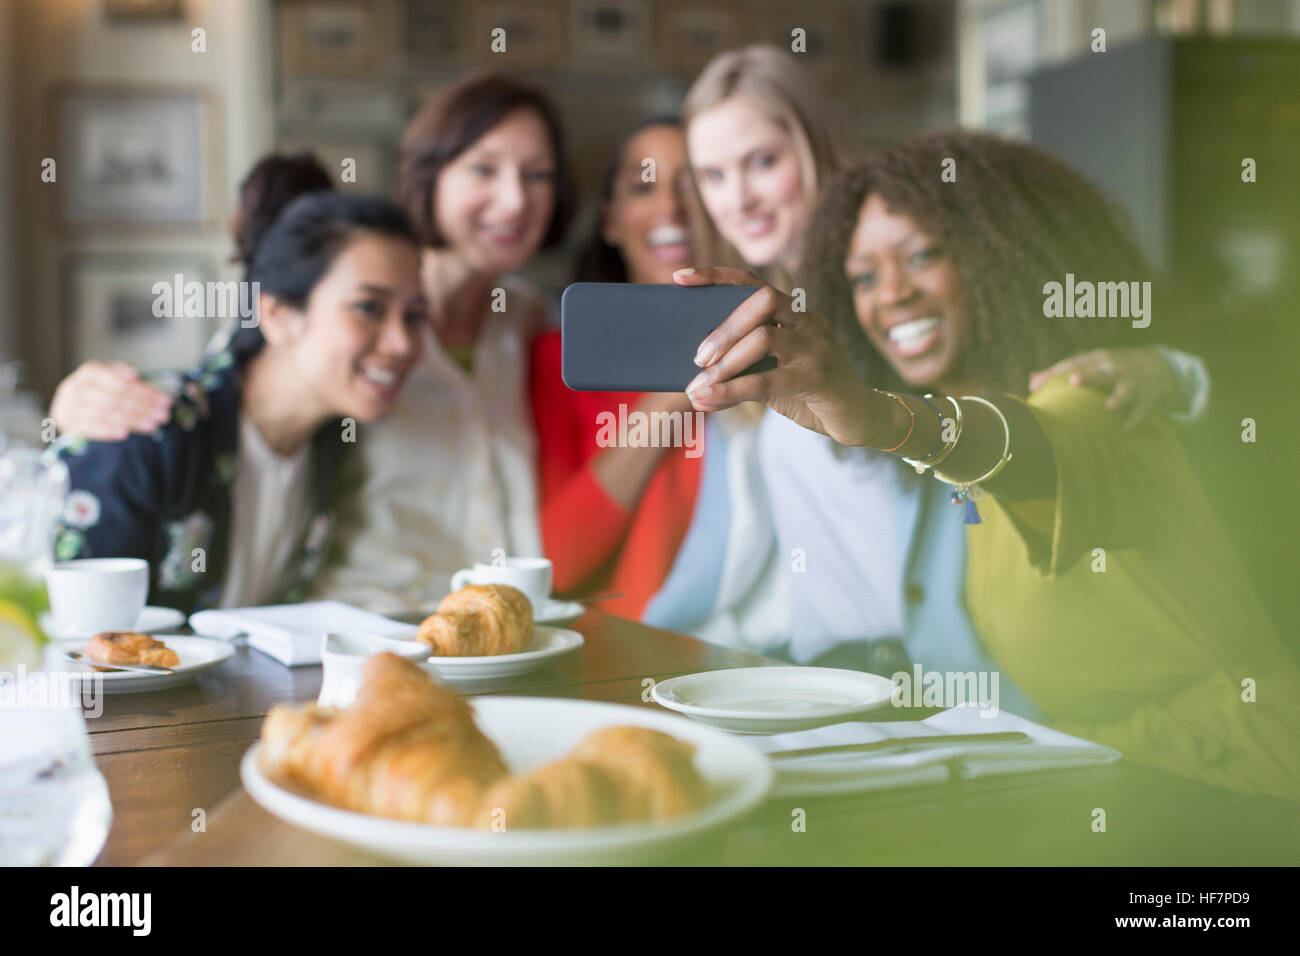 Smiling women friends avec selfies camera phone in restaurant Banque D'Images